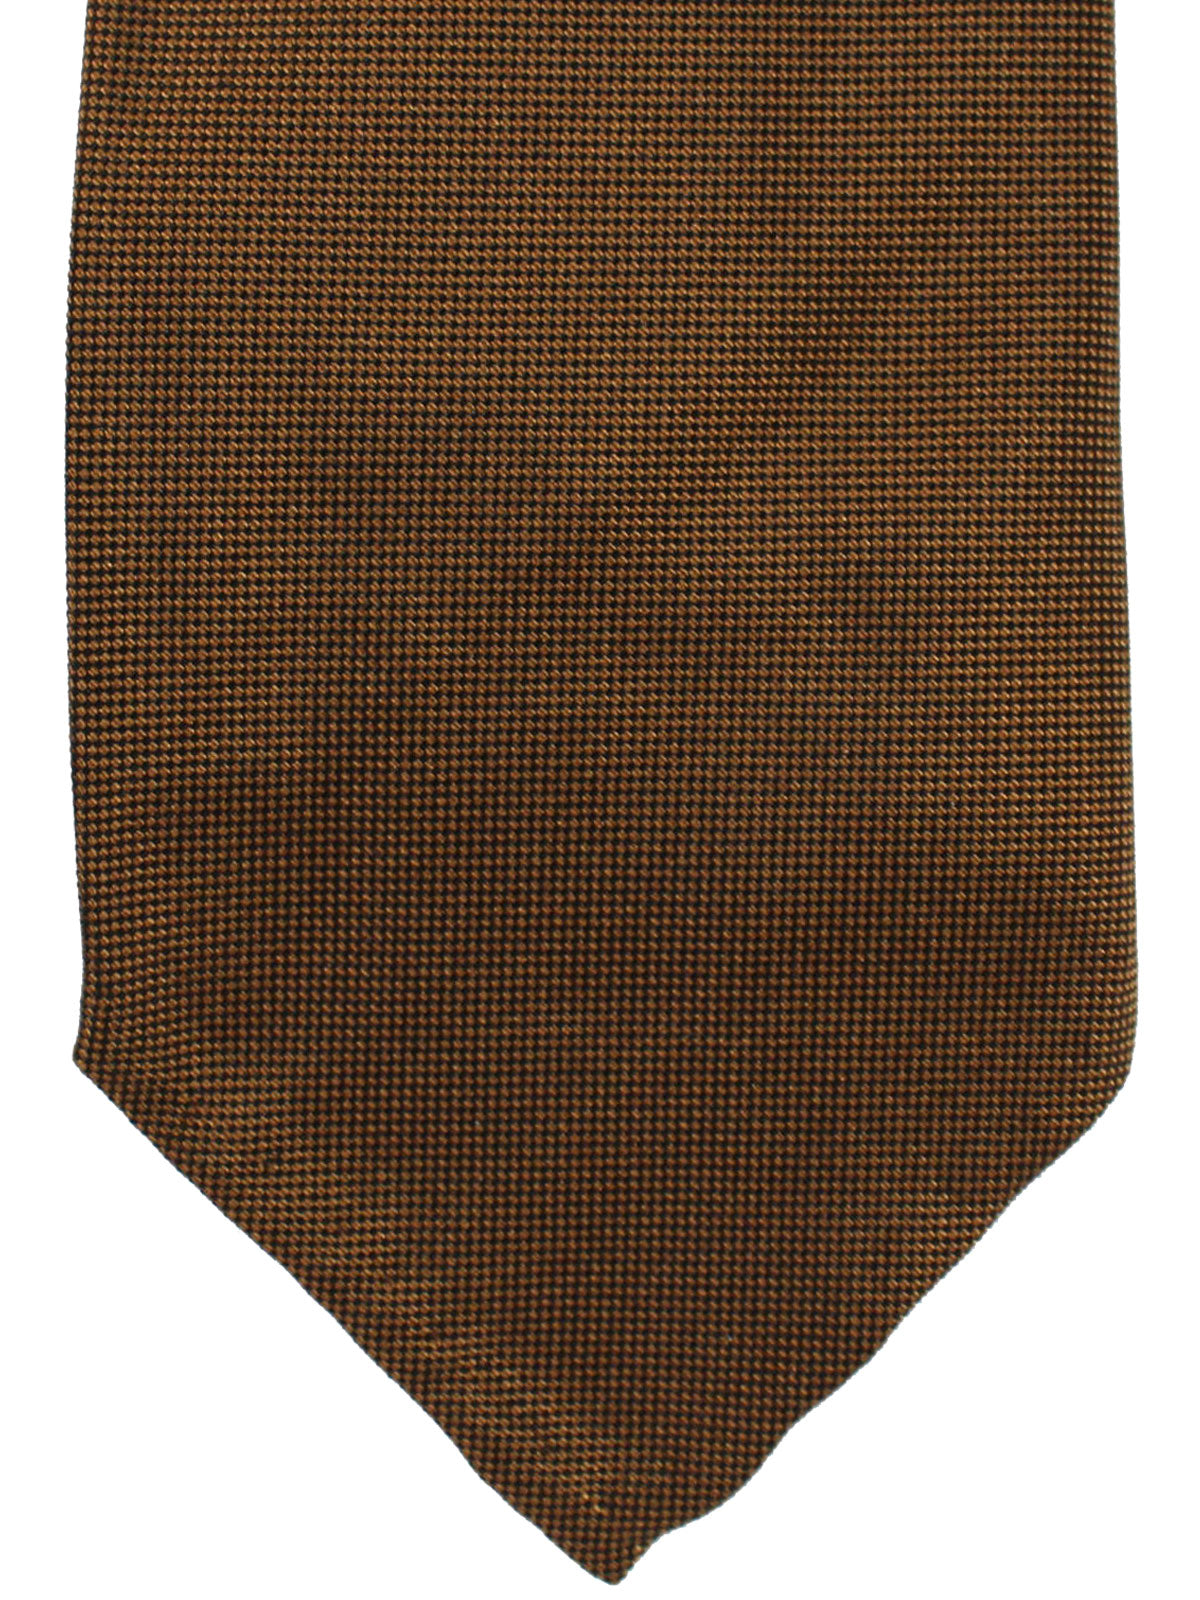 Borrelli Necktie - Unlined Brown Micro Dots Design